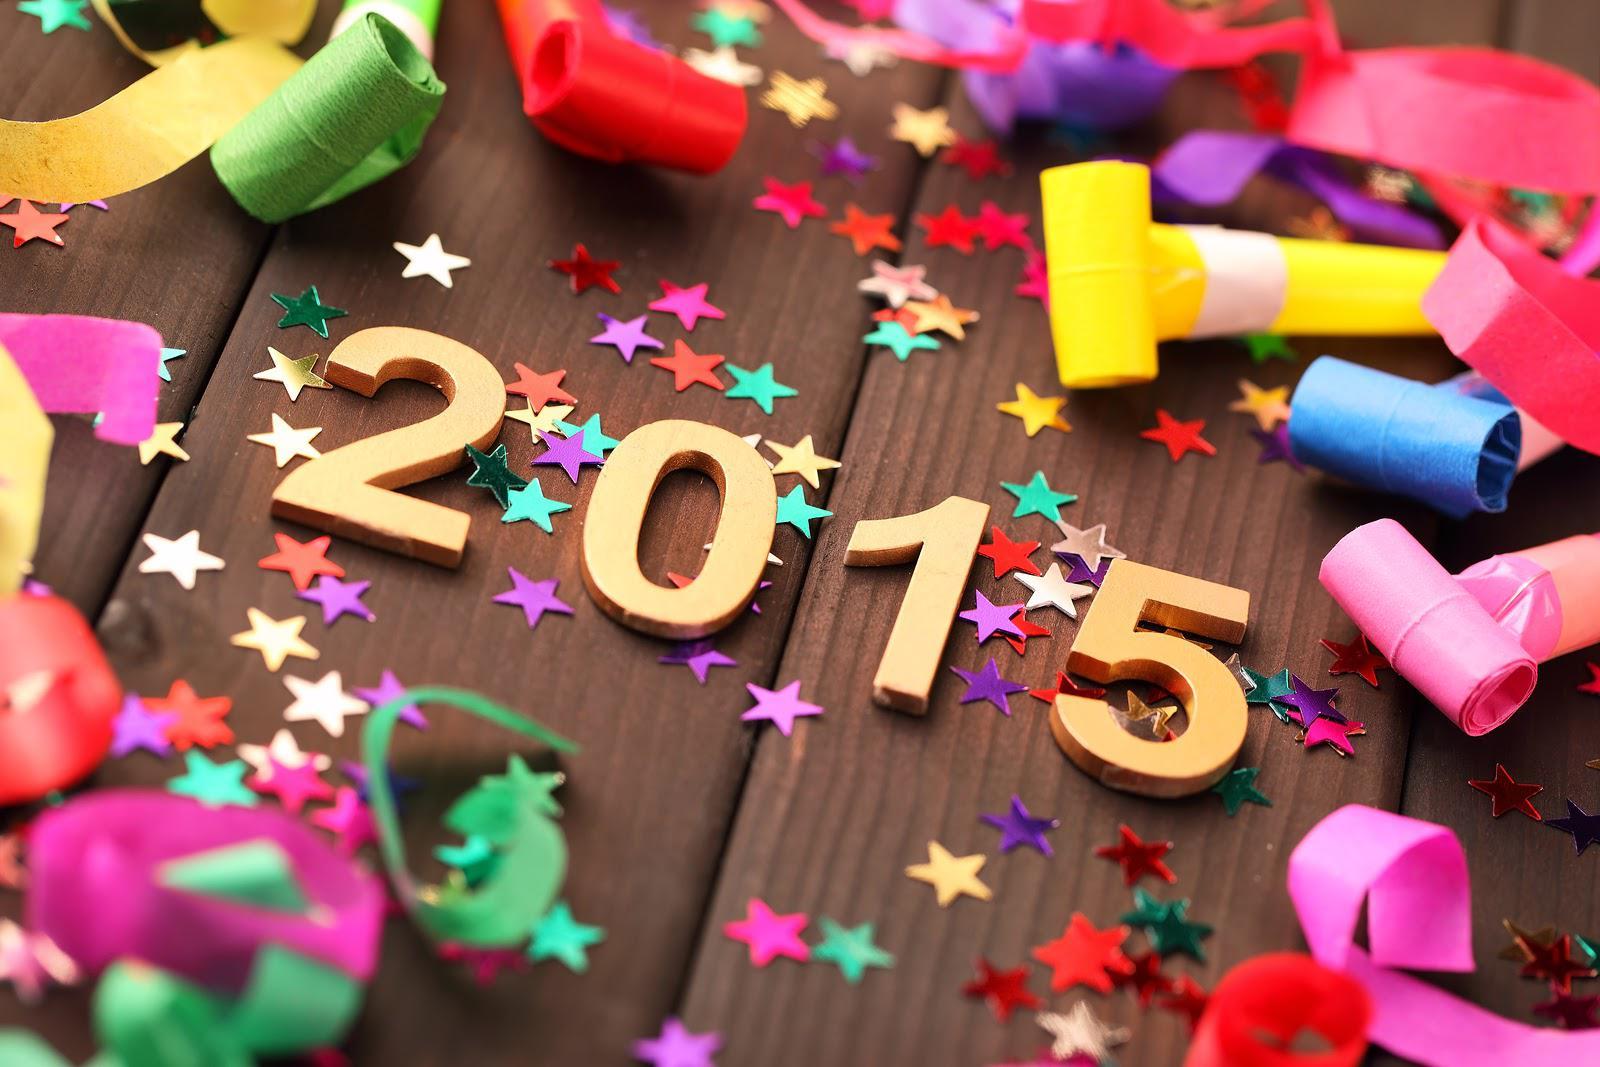 Happy New Year 2015 PC Image HD Wallpaper Wallpaper